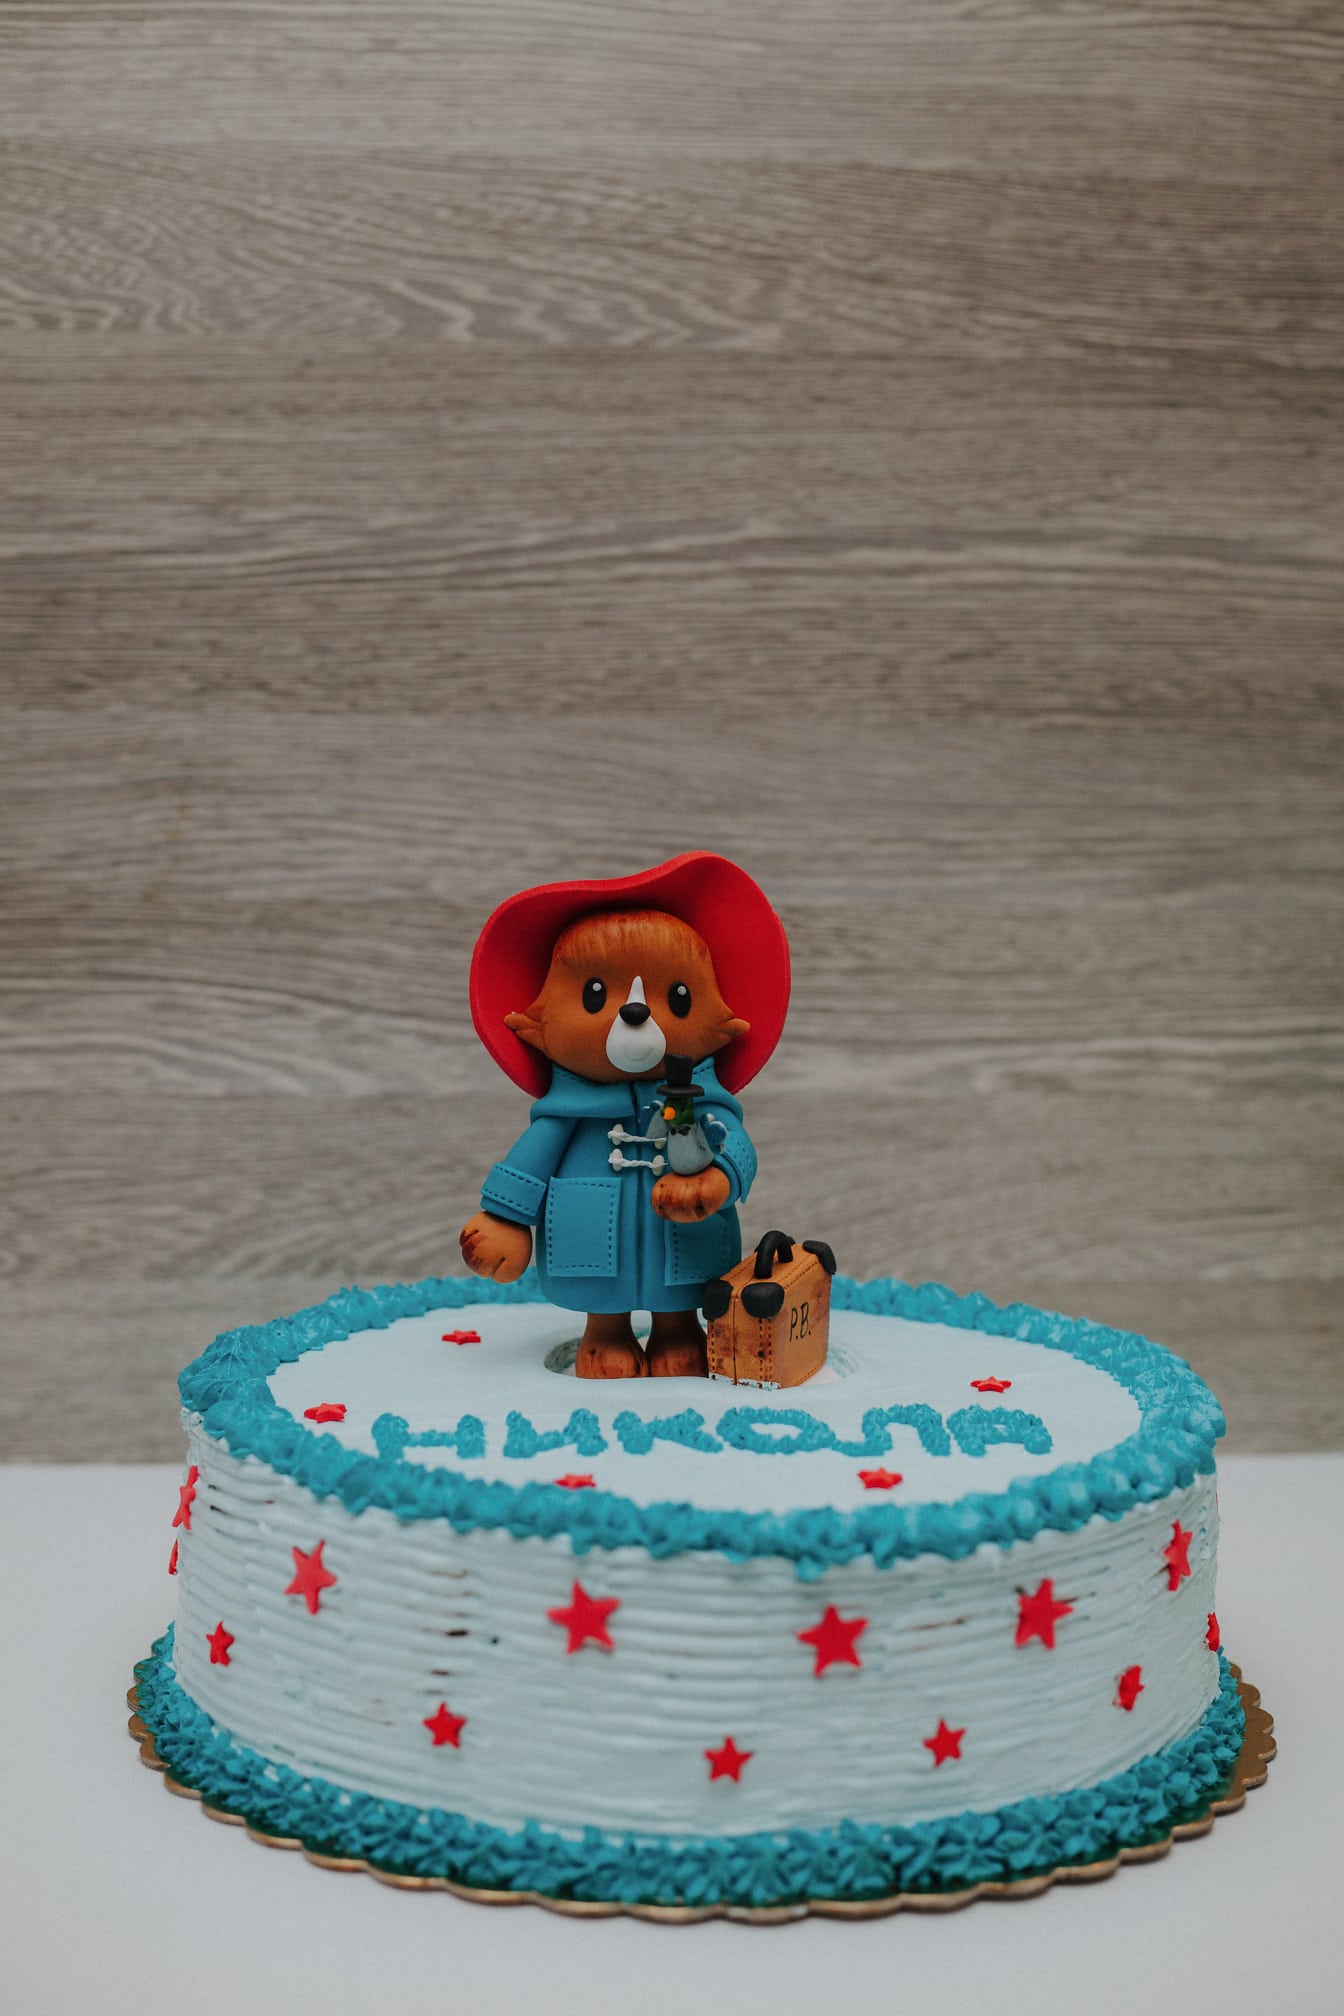 Birthday cake with paddington bear toy